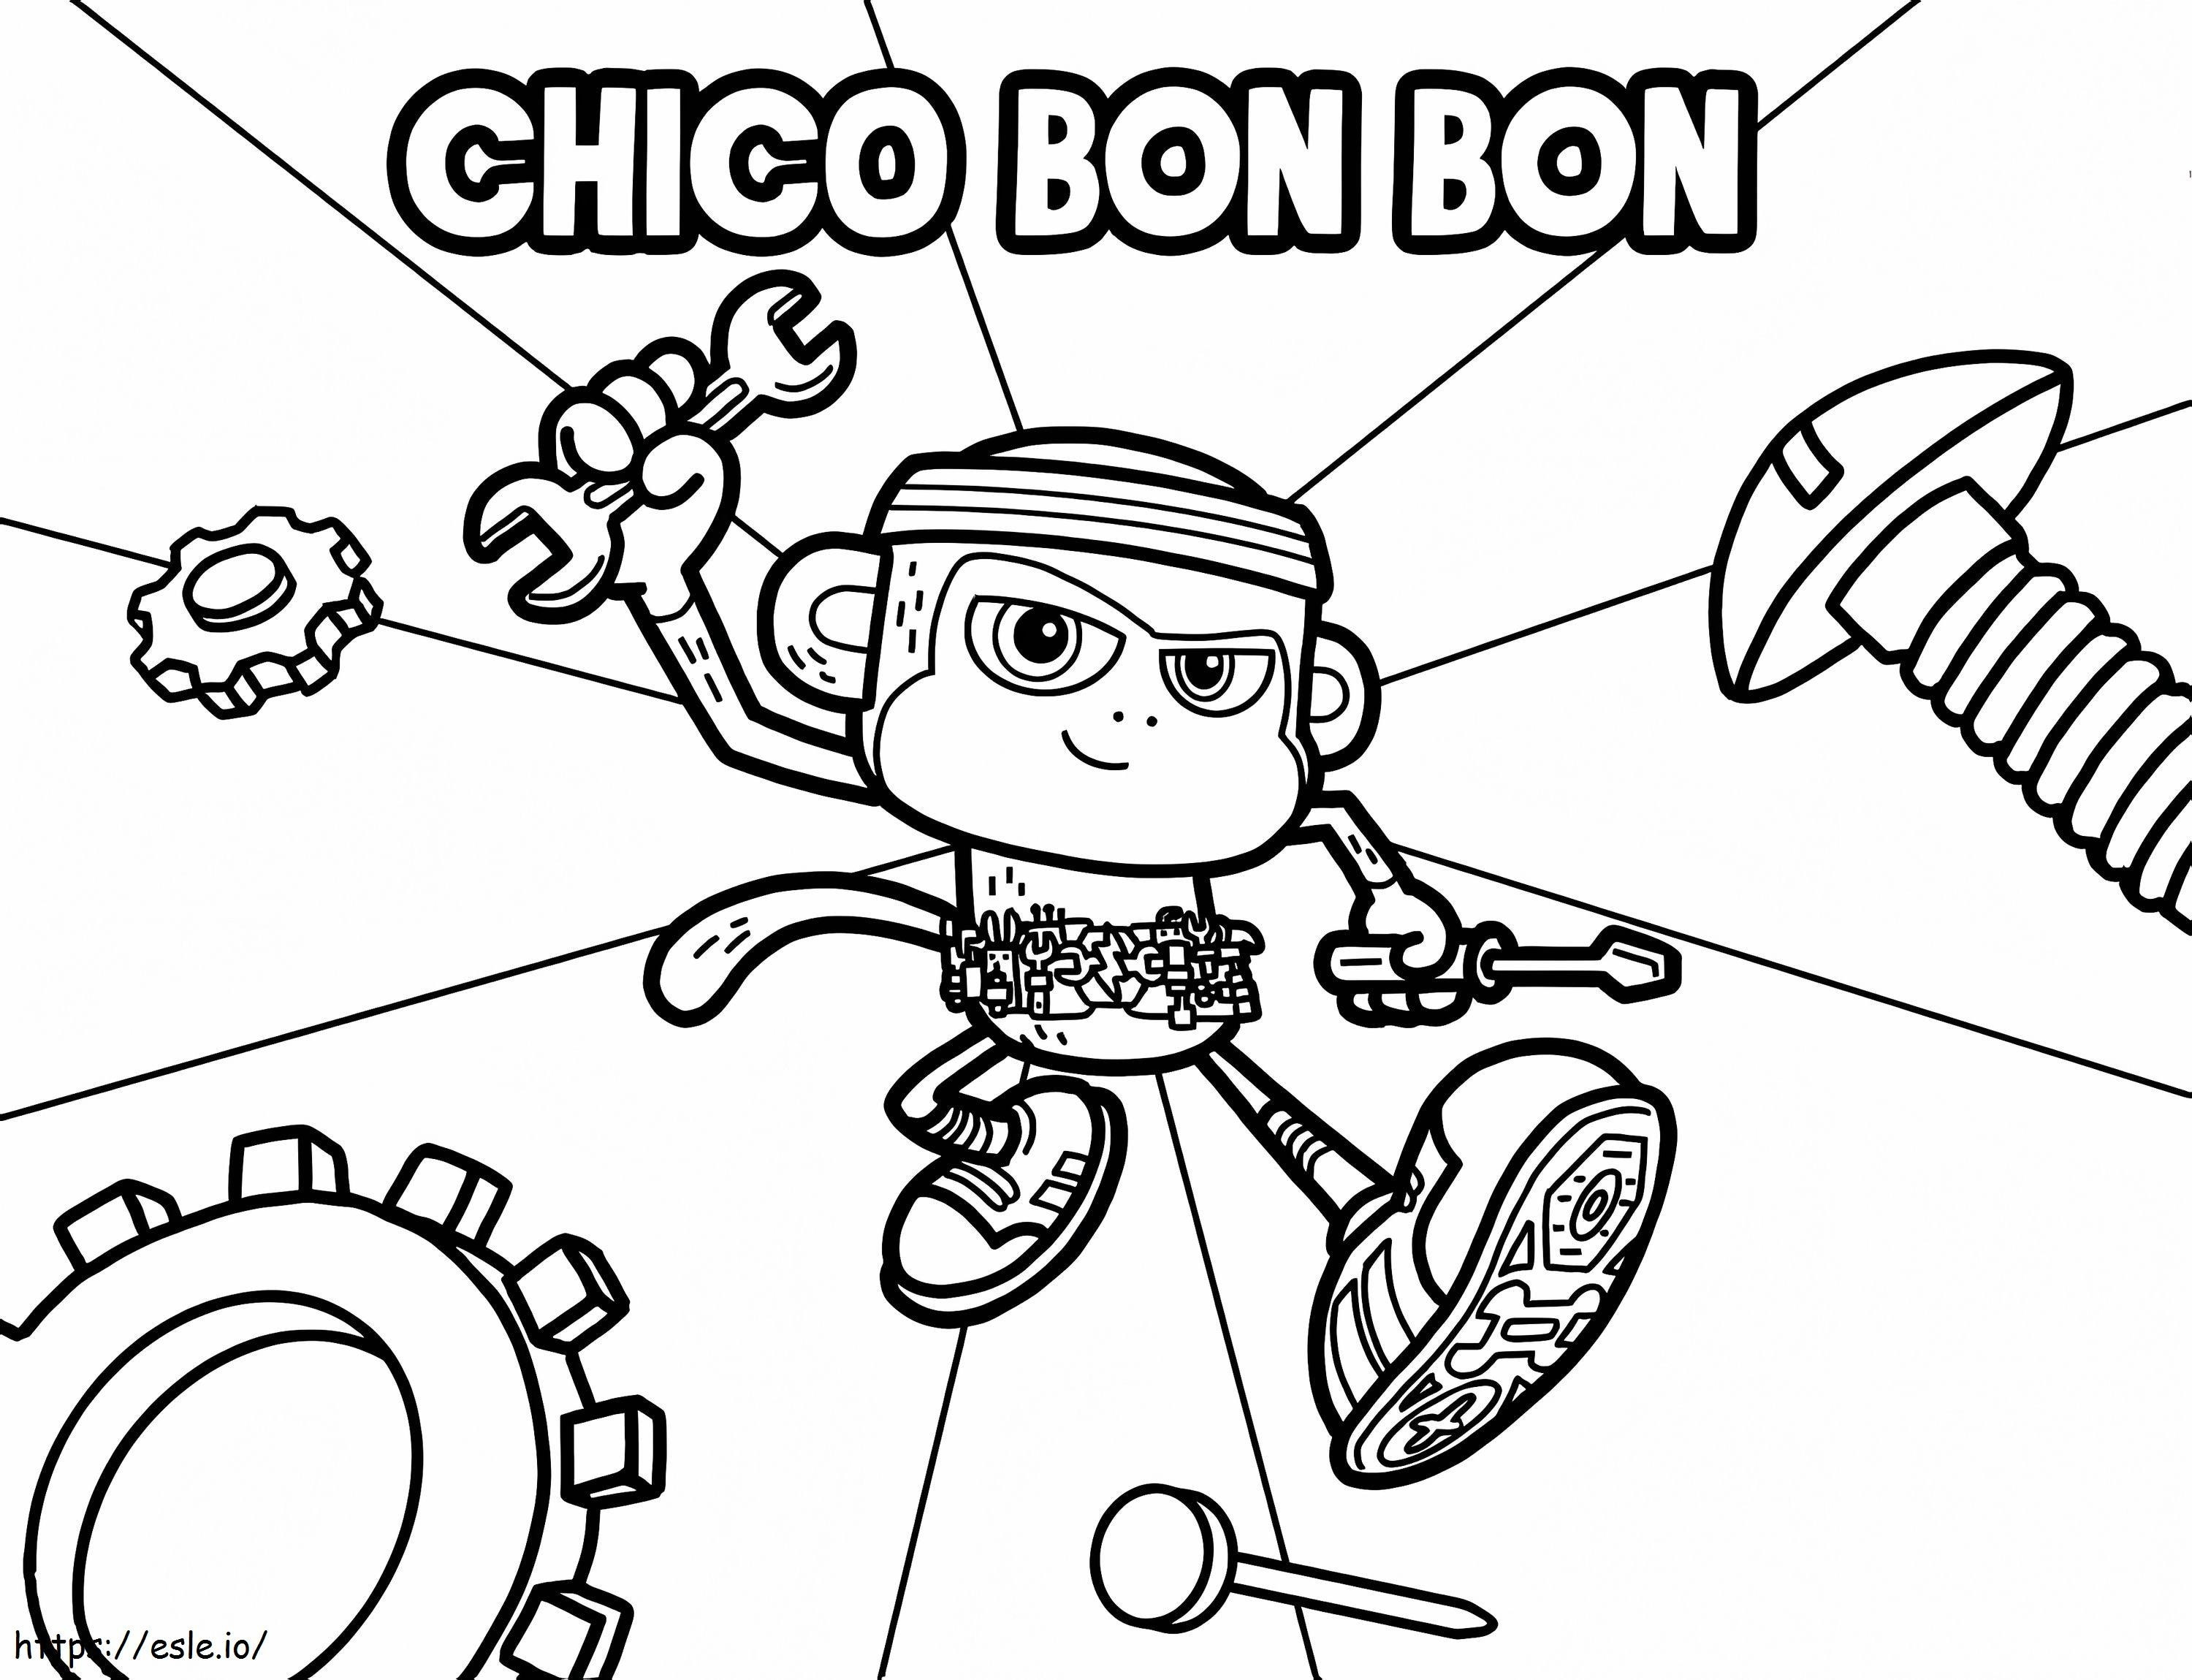 Legal Chico Bon Bon para colorir